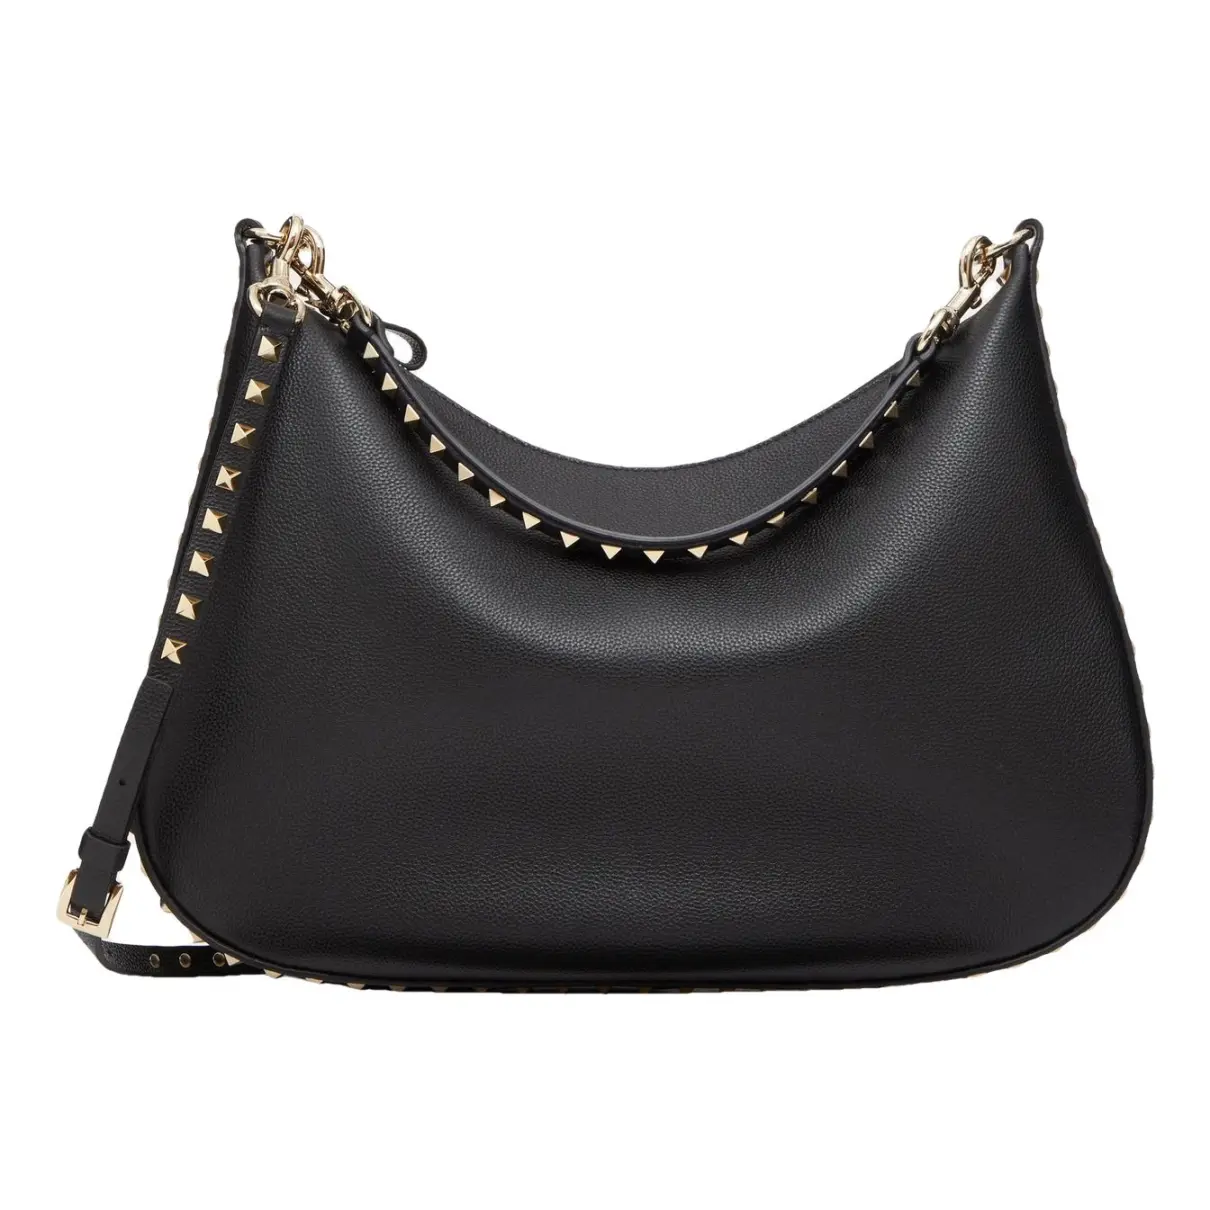 Rockstud Hobo leather handbag